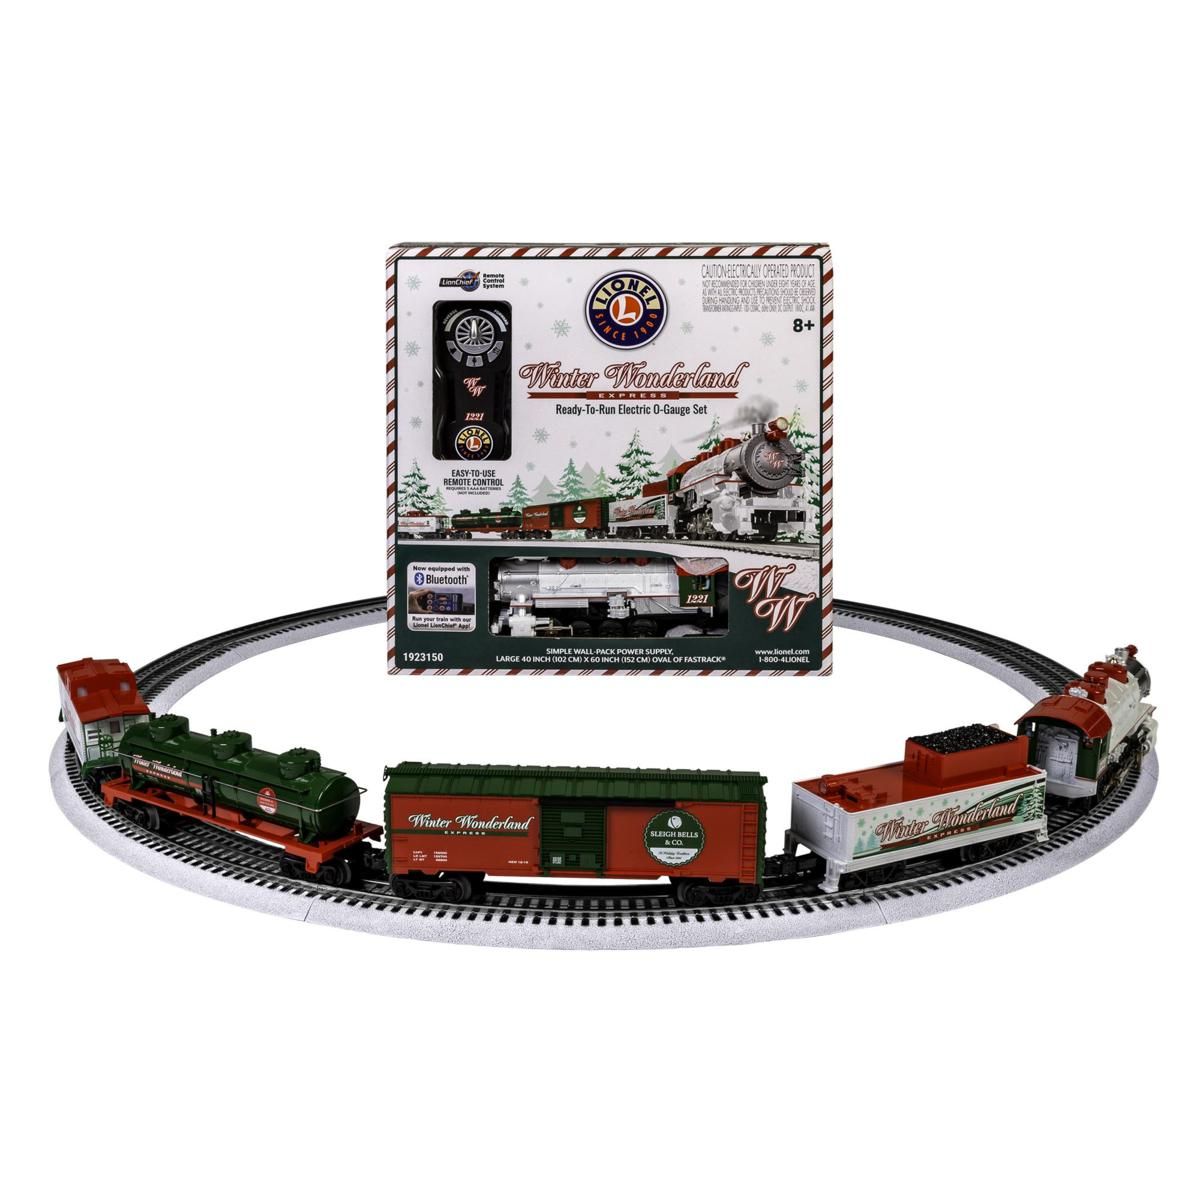 Lionel Winter Wonderland Electric O Gauge Train Set wRemote, Bluetooth - 9826755 | HSN | HSN